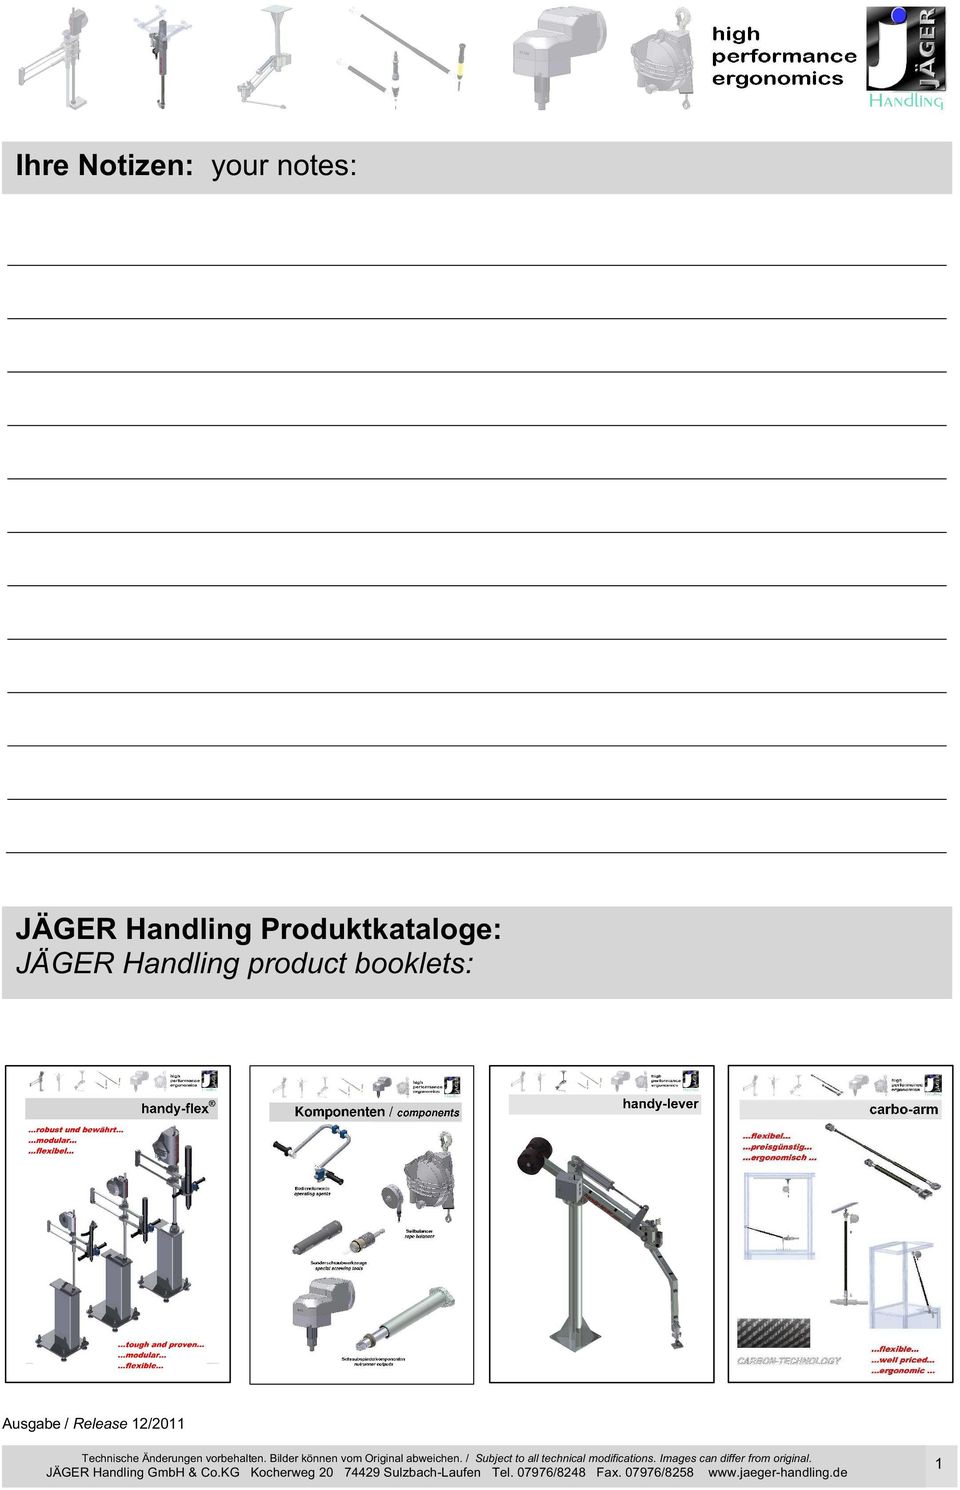 JÄGER Handling GmbH & Co.